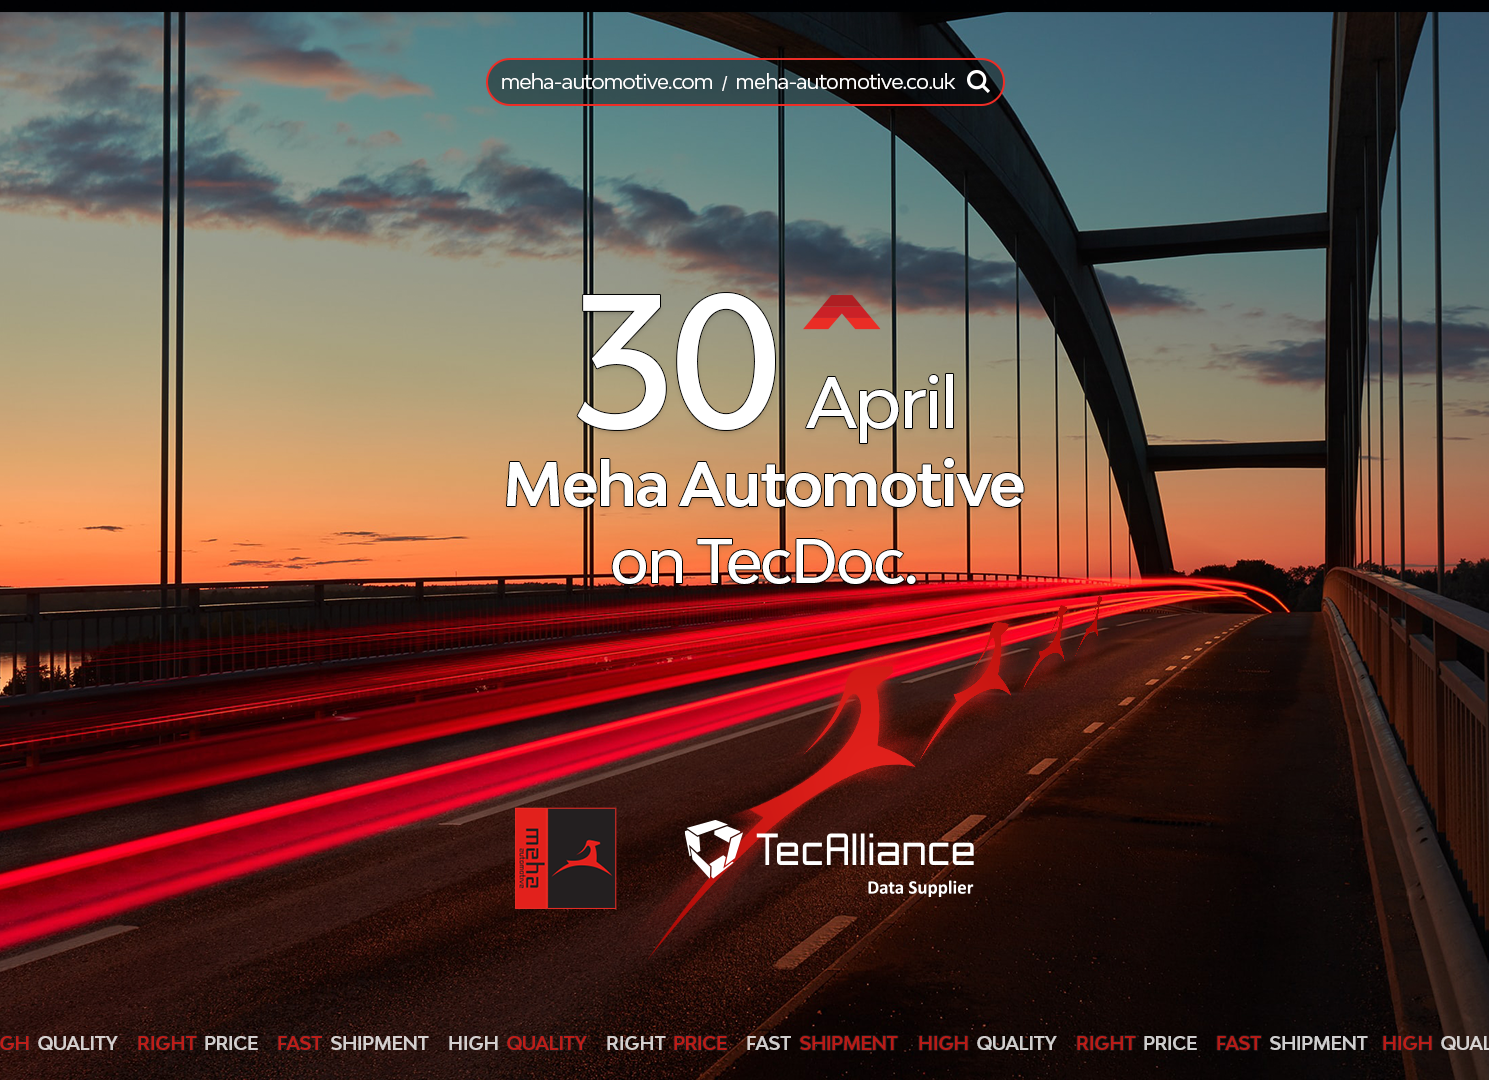 Meha Automotive Tecdoc Partner from April 30